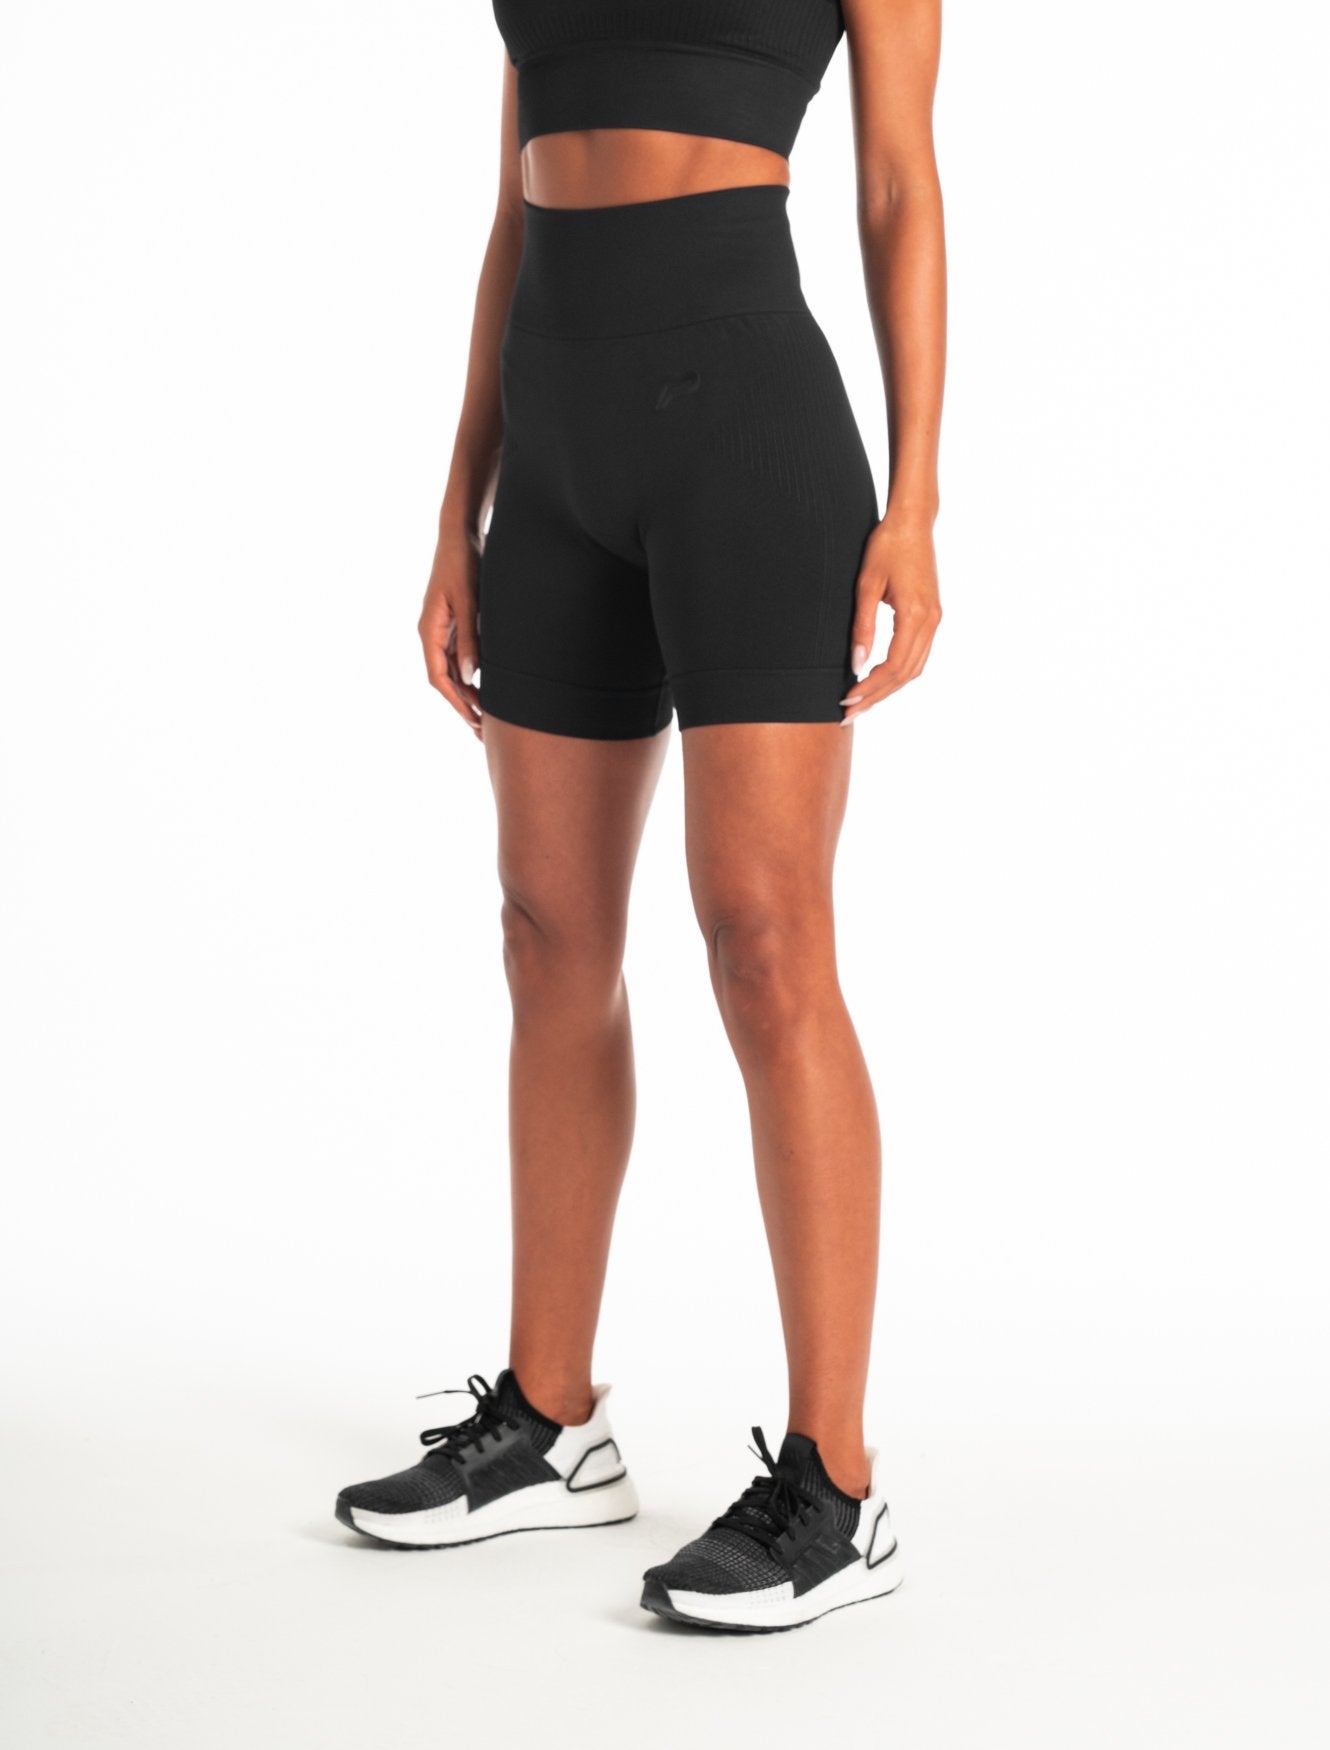 ADAPT Seamless Shorts / Blackout Pursue Fitness 5